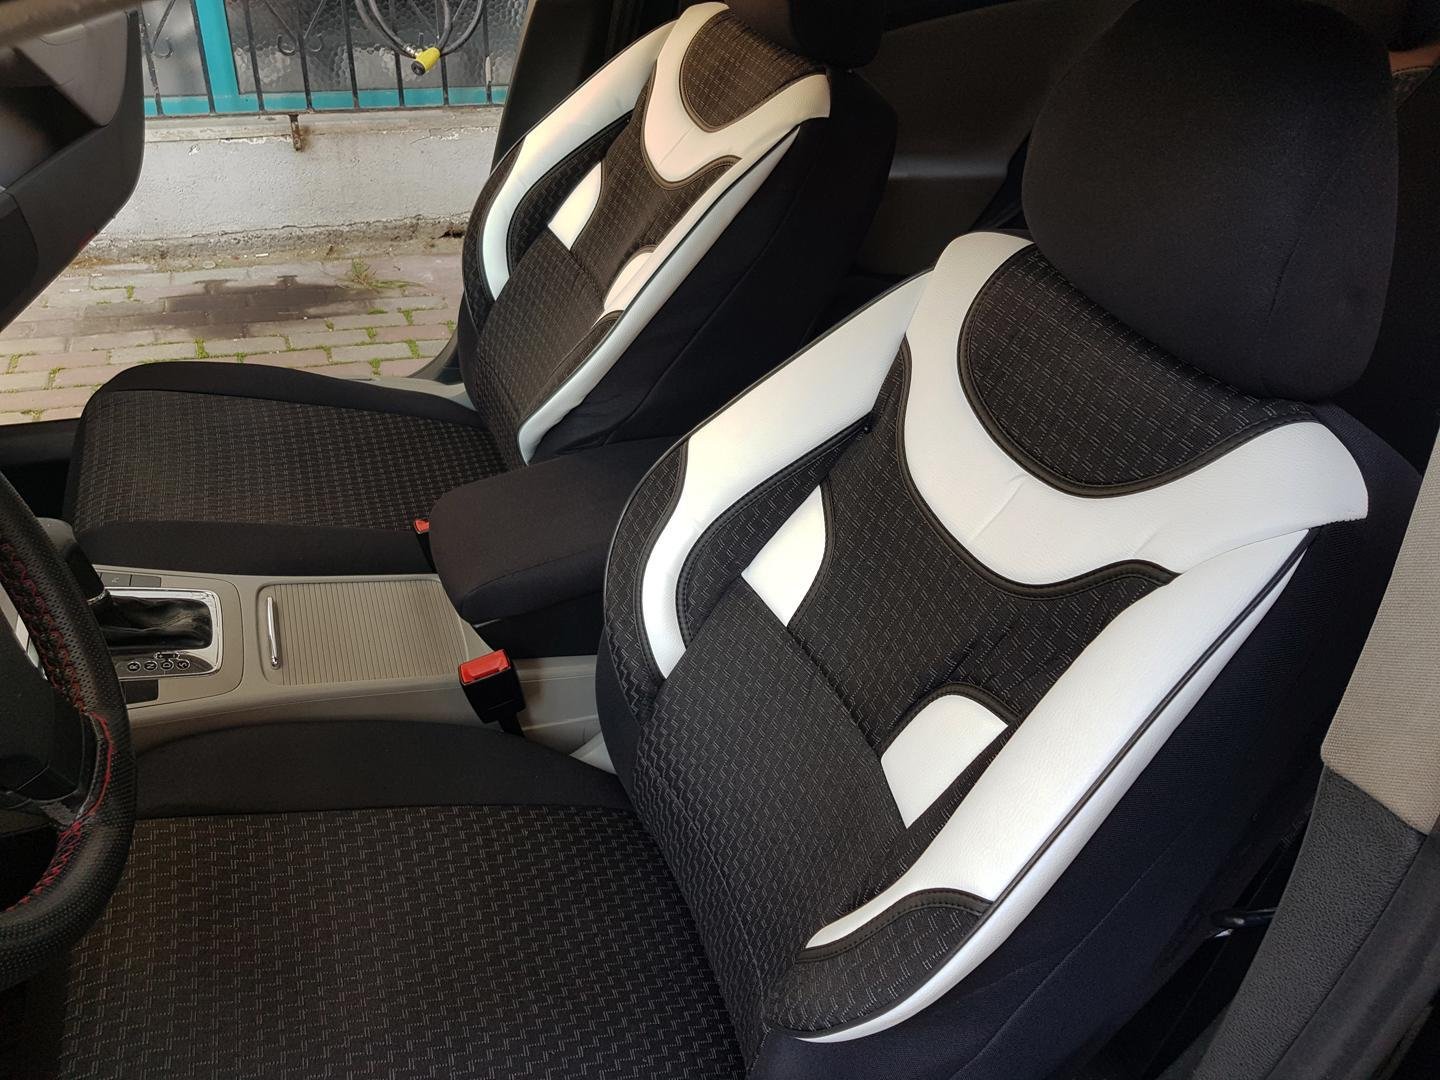 Schwarz-rot Effekt 3D Sitzbezüge für SKODA FABIA Autositzbezug Komplett